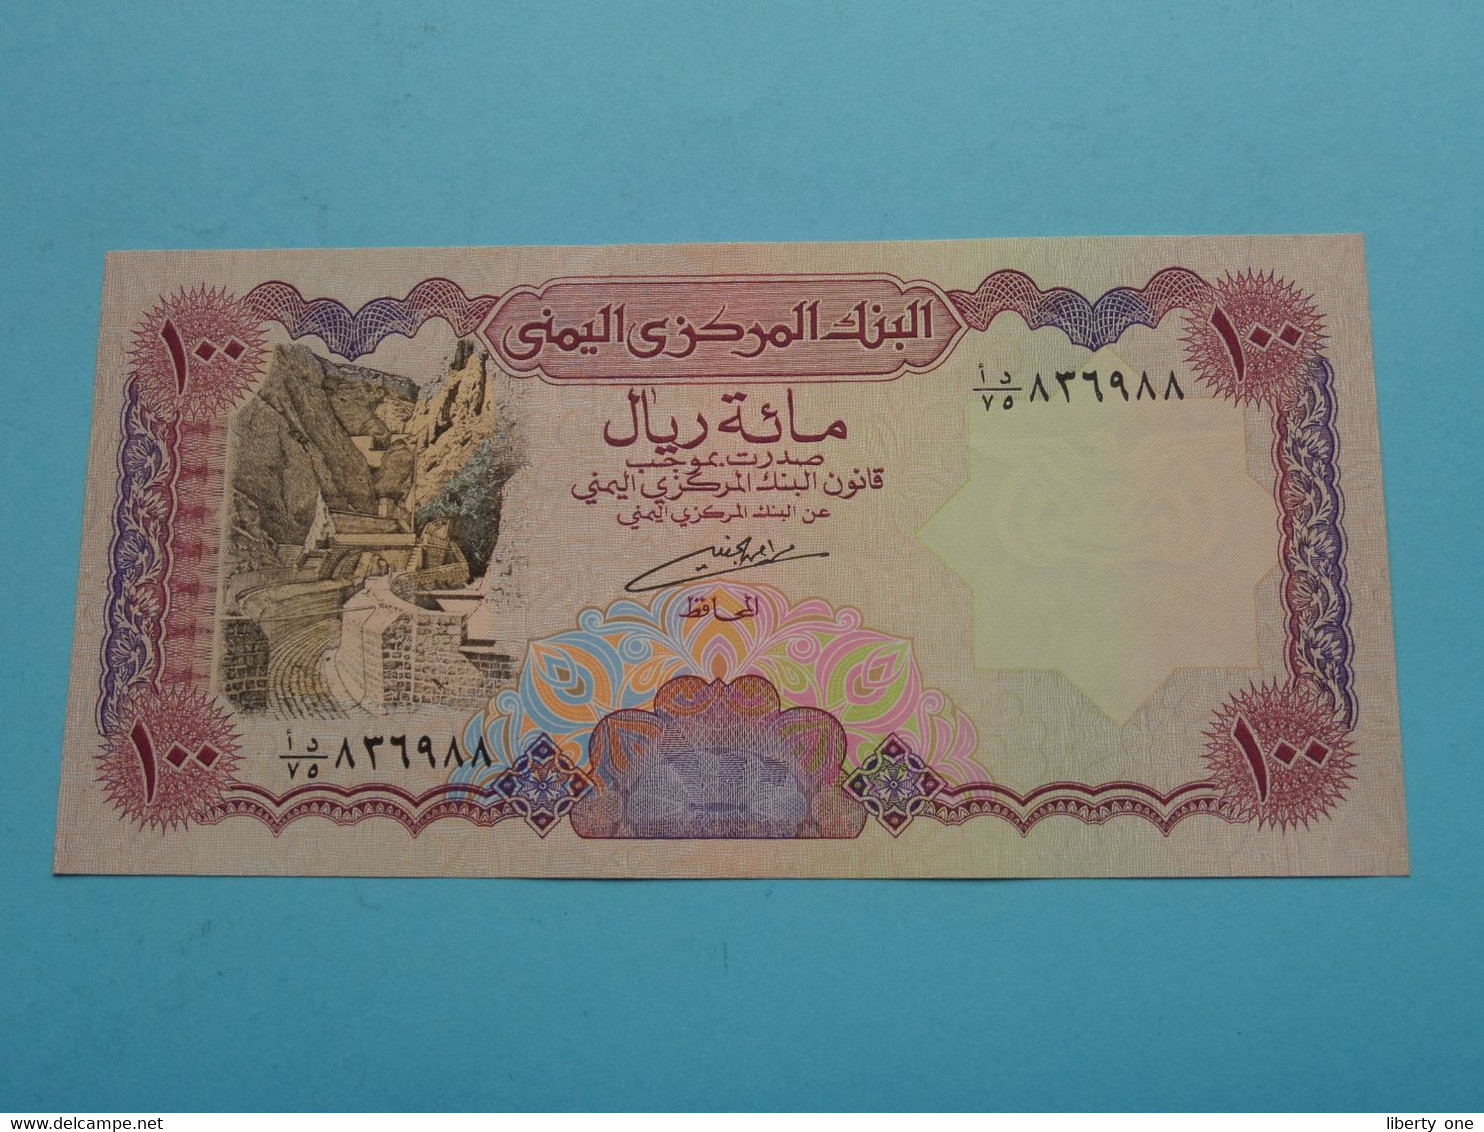 100 - 1 Hundred RIALS () Central Bank Of YEMEN ( For Grade See SCAN ) UNC ! - Jemen